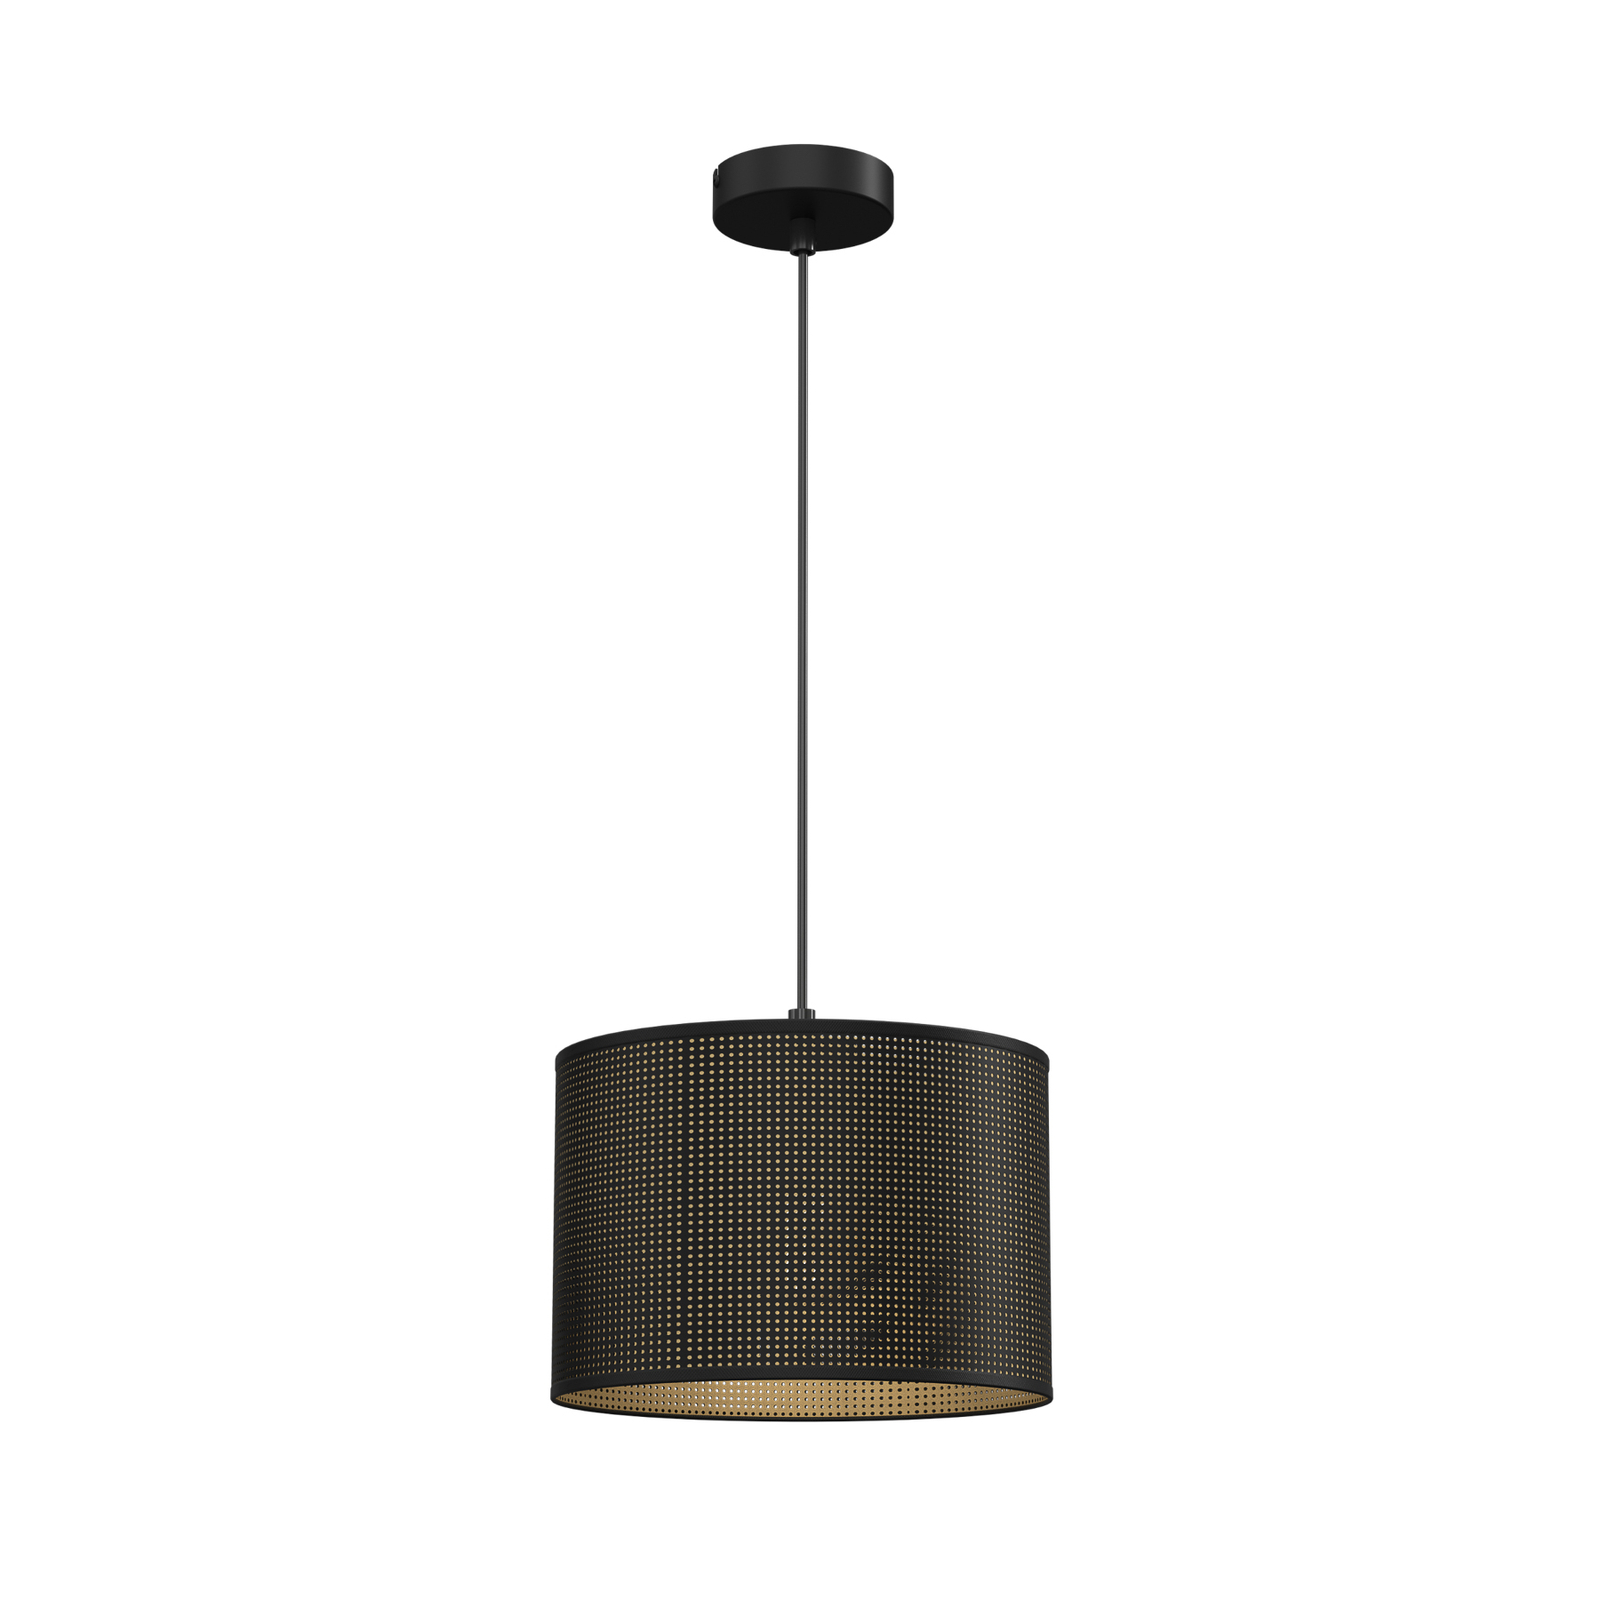 Jovin pendant light one-bulb Ø 25cm, black/gold